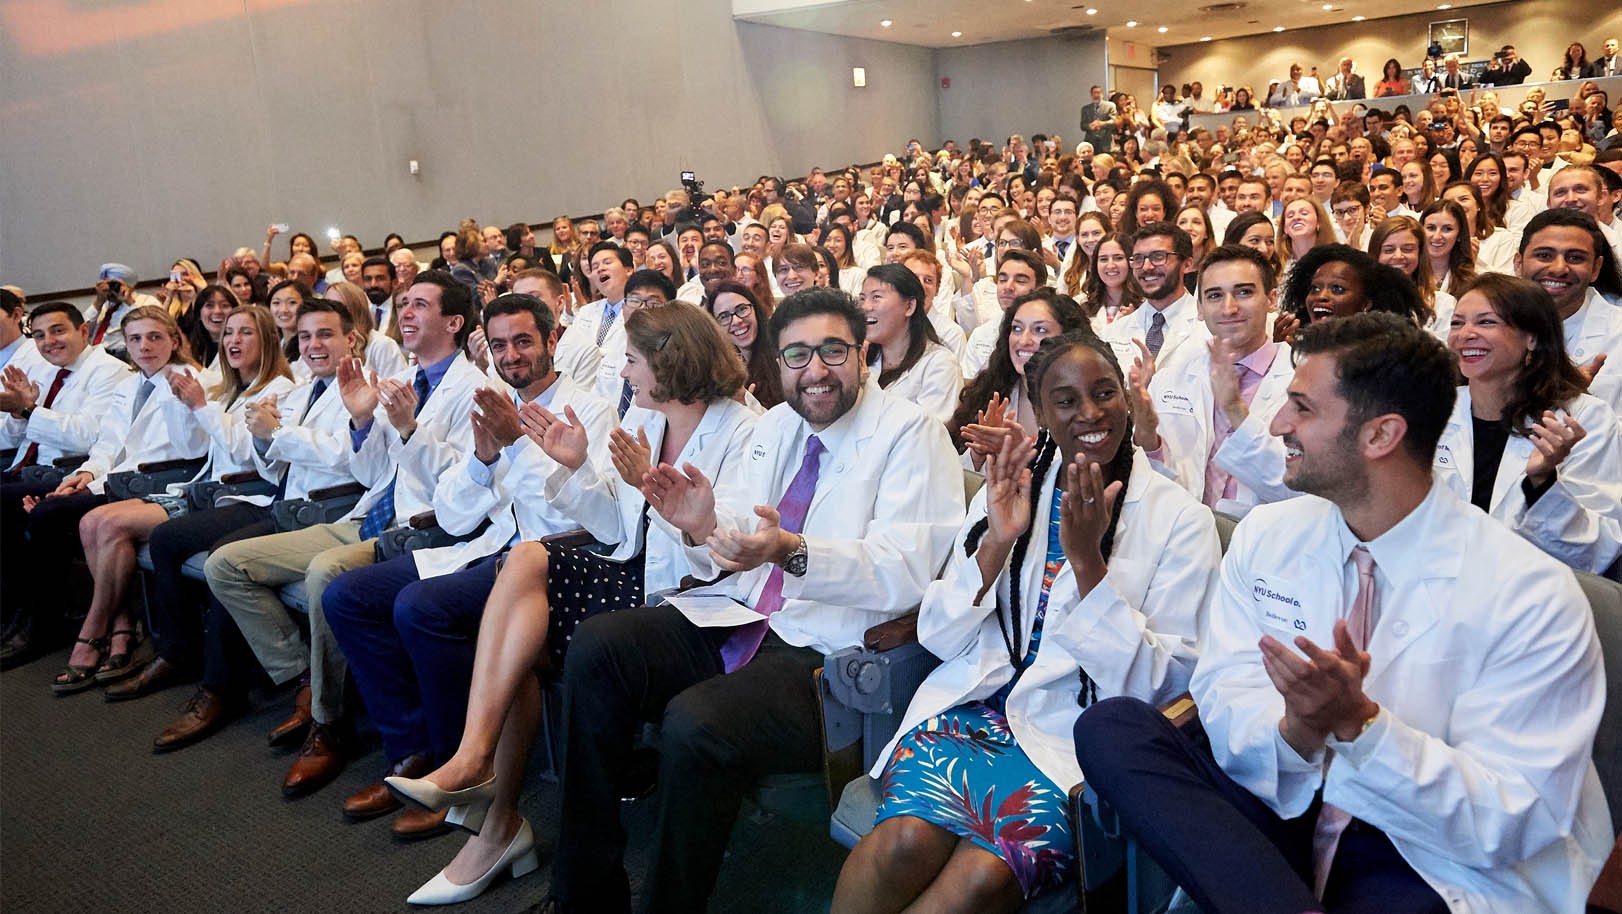 NYU Grossman School of Medicine | LinkedIn